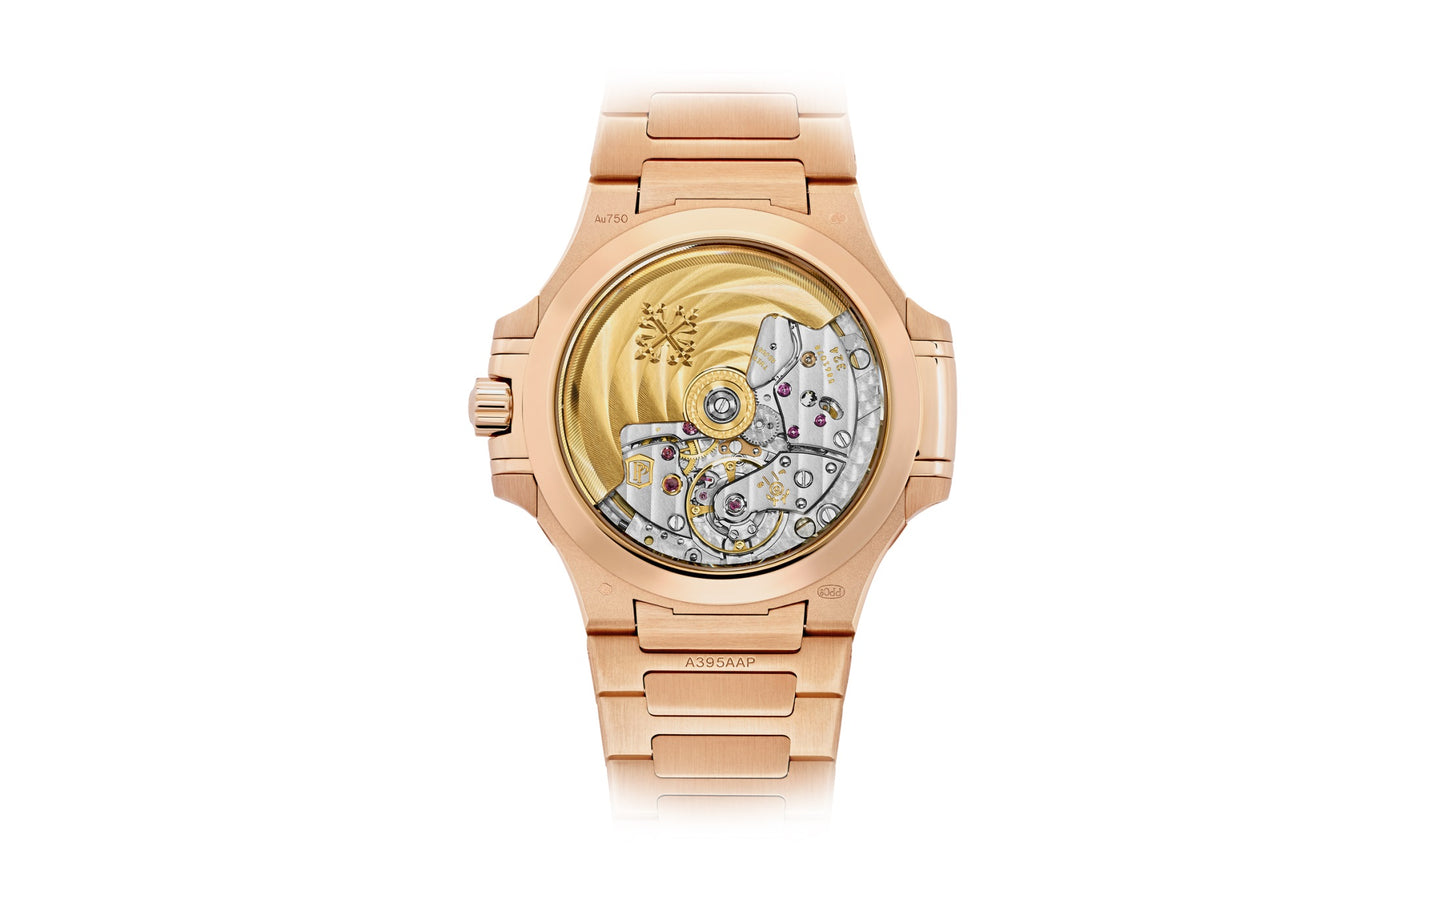 Patek Philippe Nautilus Ladies Automatic Watch, 18k Rose Gold and Diamonds, 35,2mm, Ref# 7118/1200R-001, back